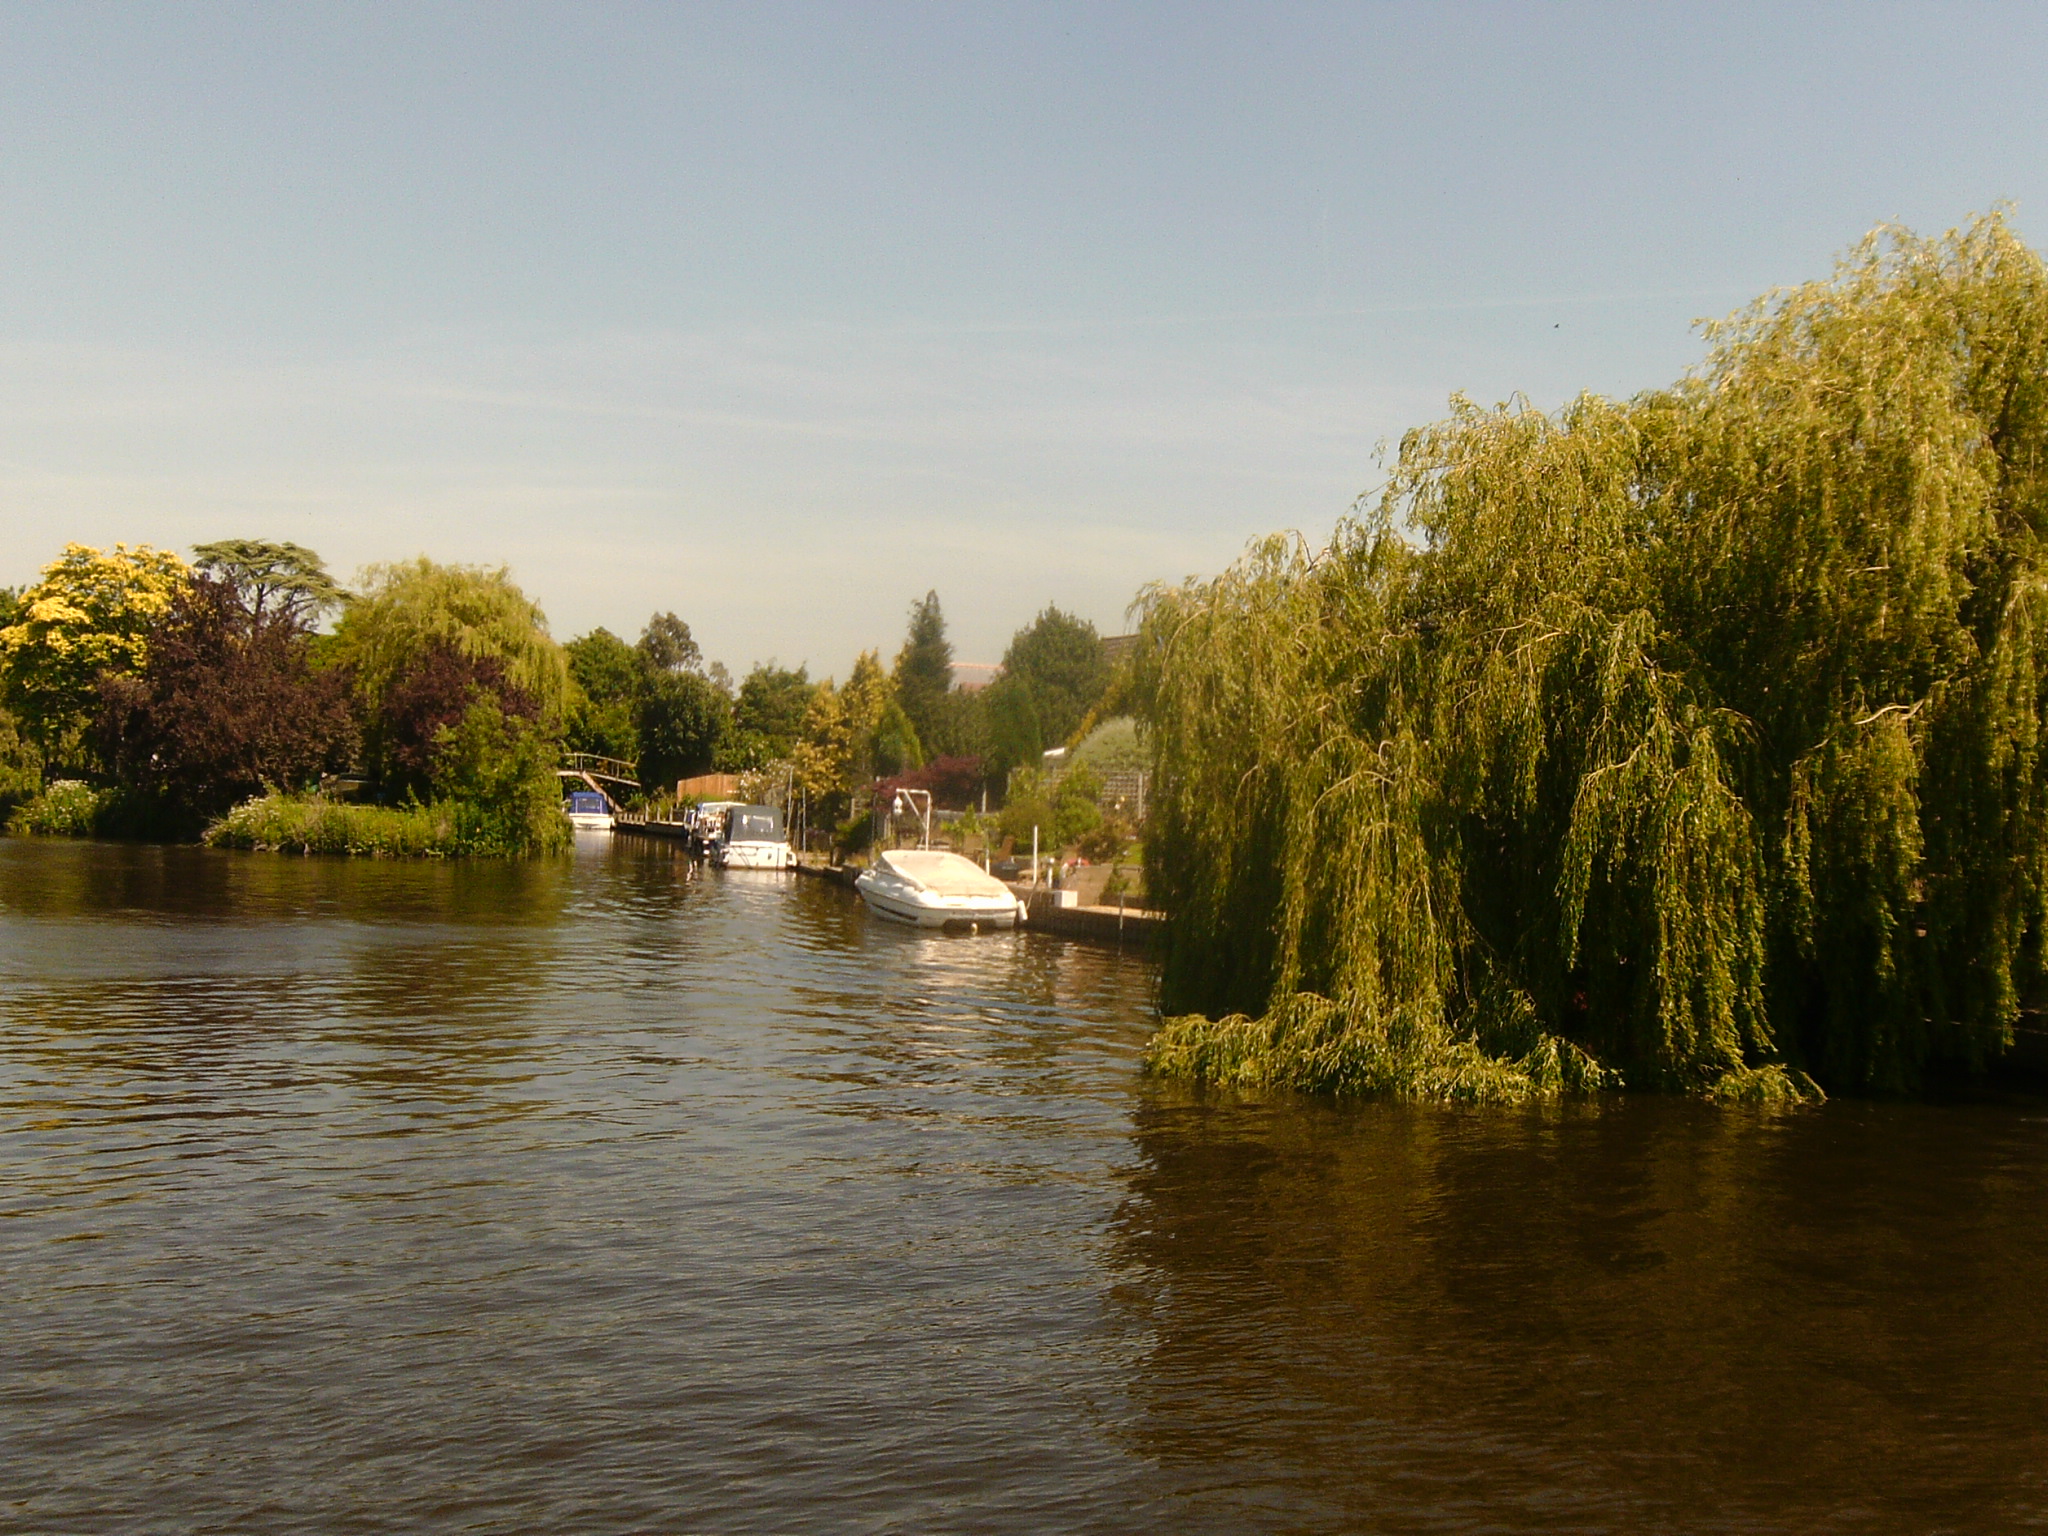 River Thames